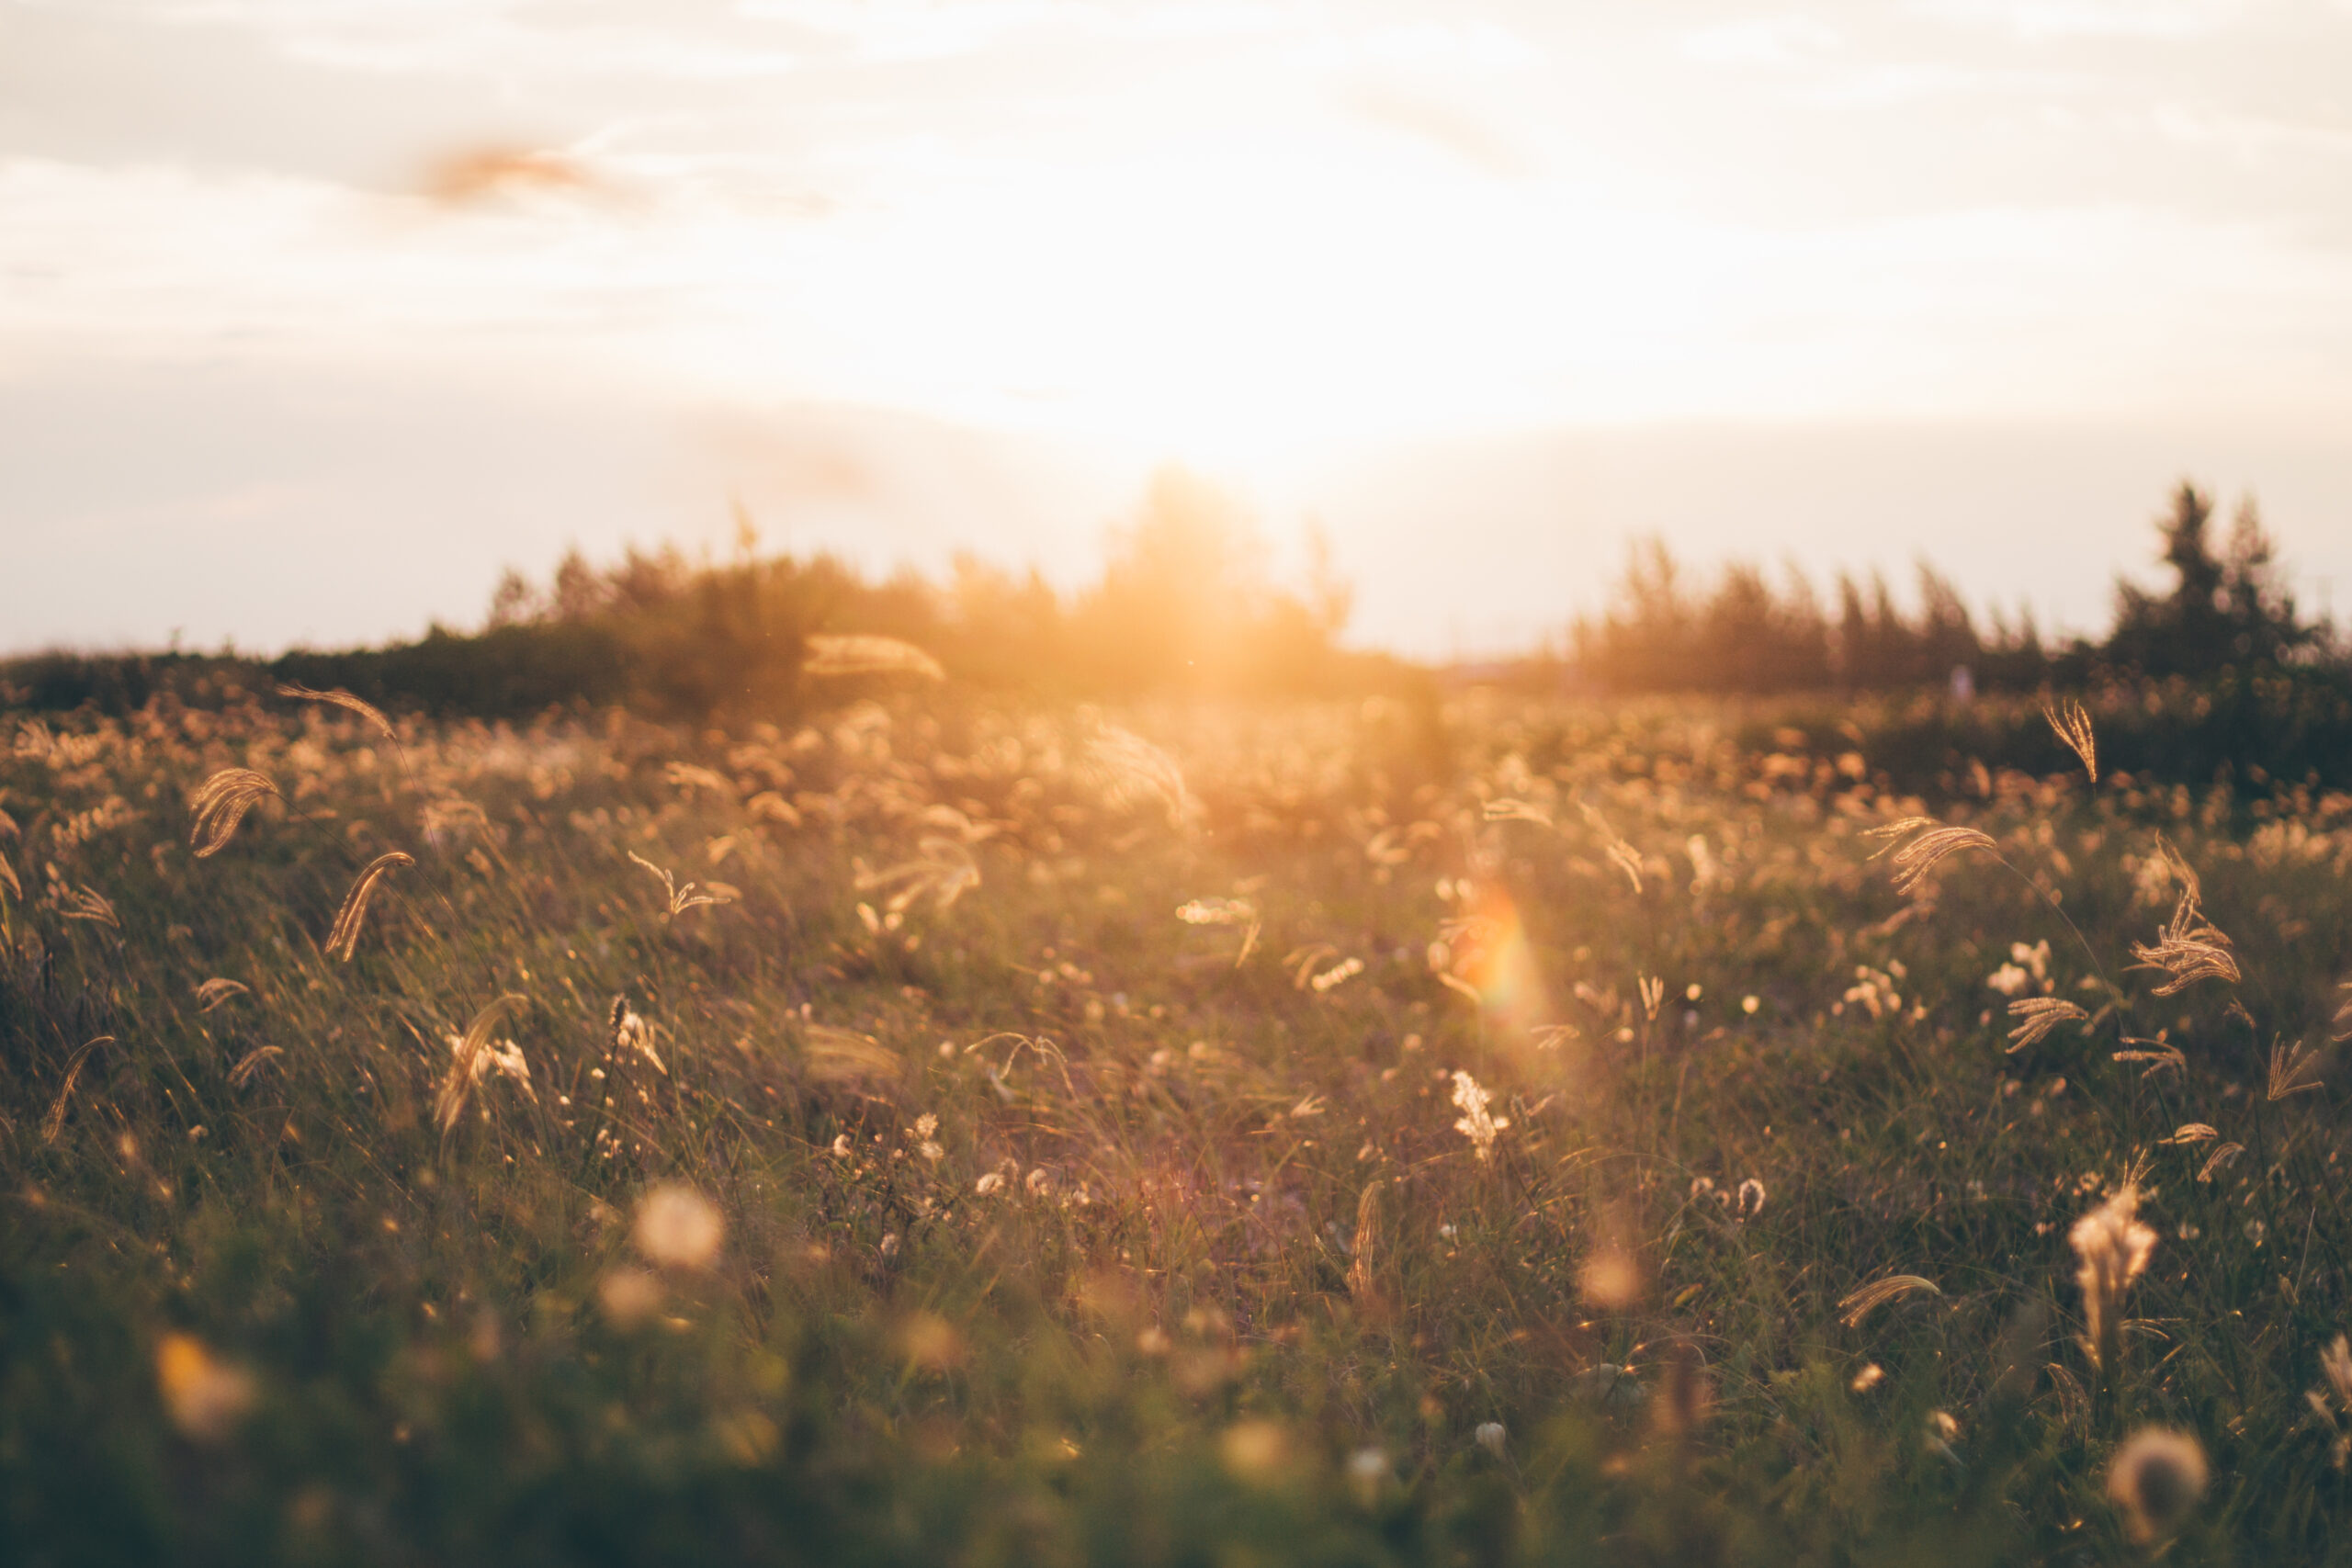 Photograph depicting a sunlit meadow